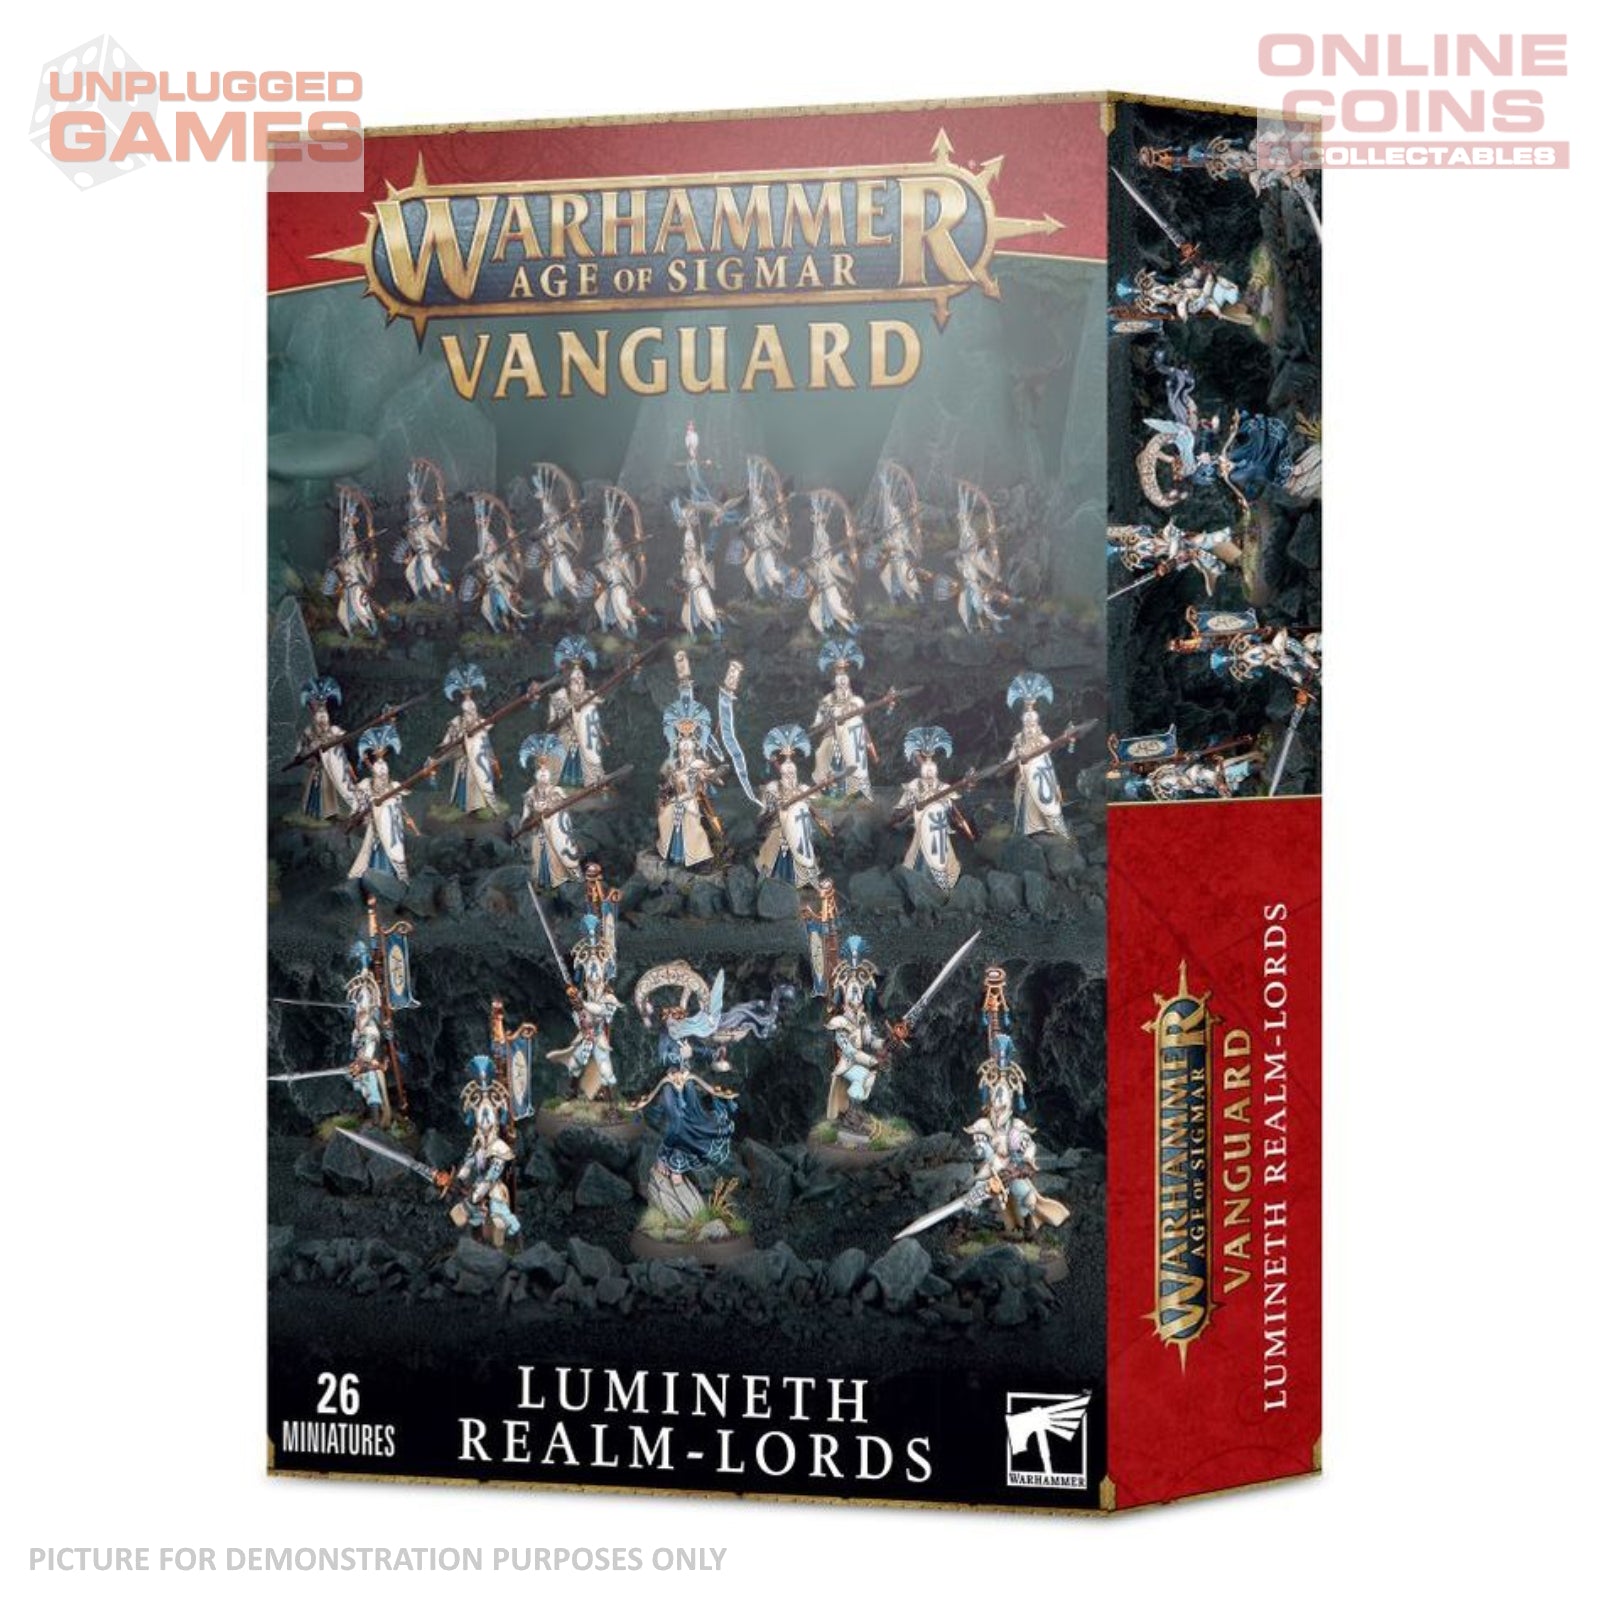 Warhammer Age of Sigmar - Vanguard Lumineth Realm-Lords